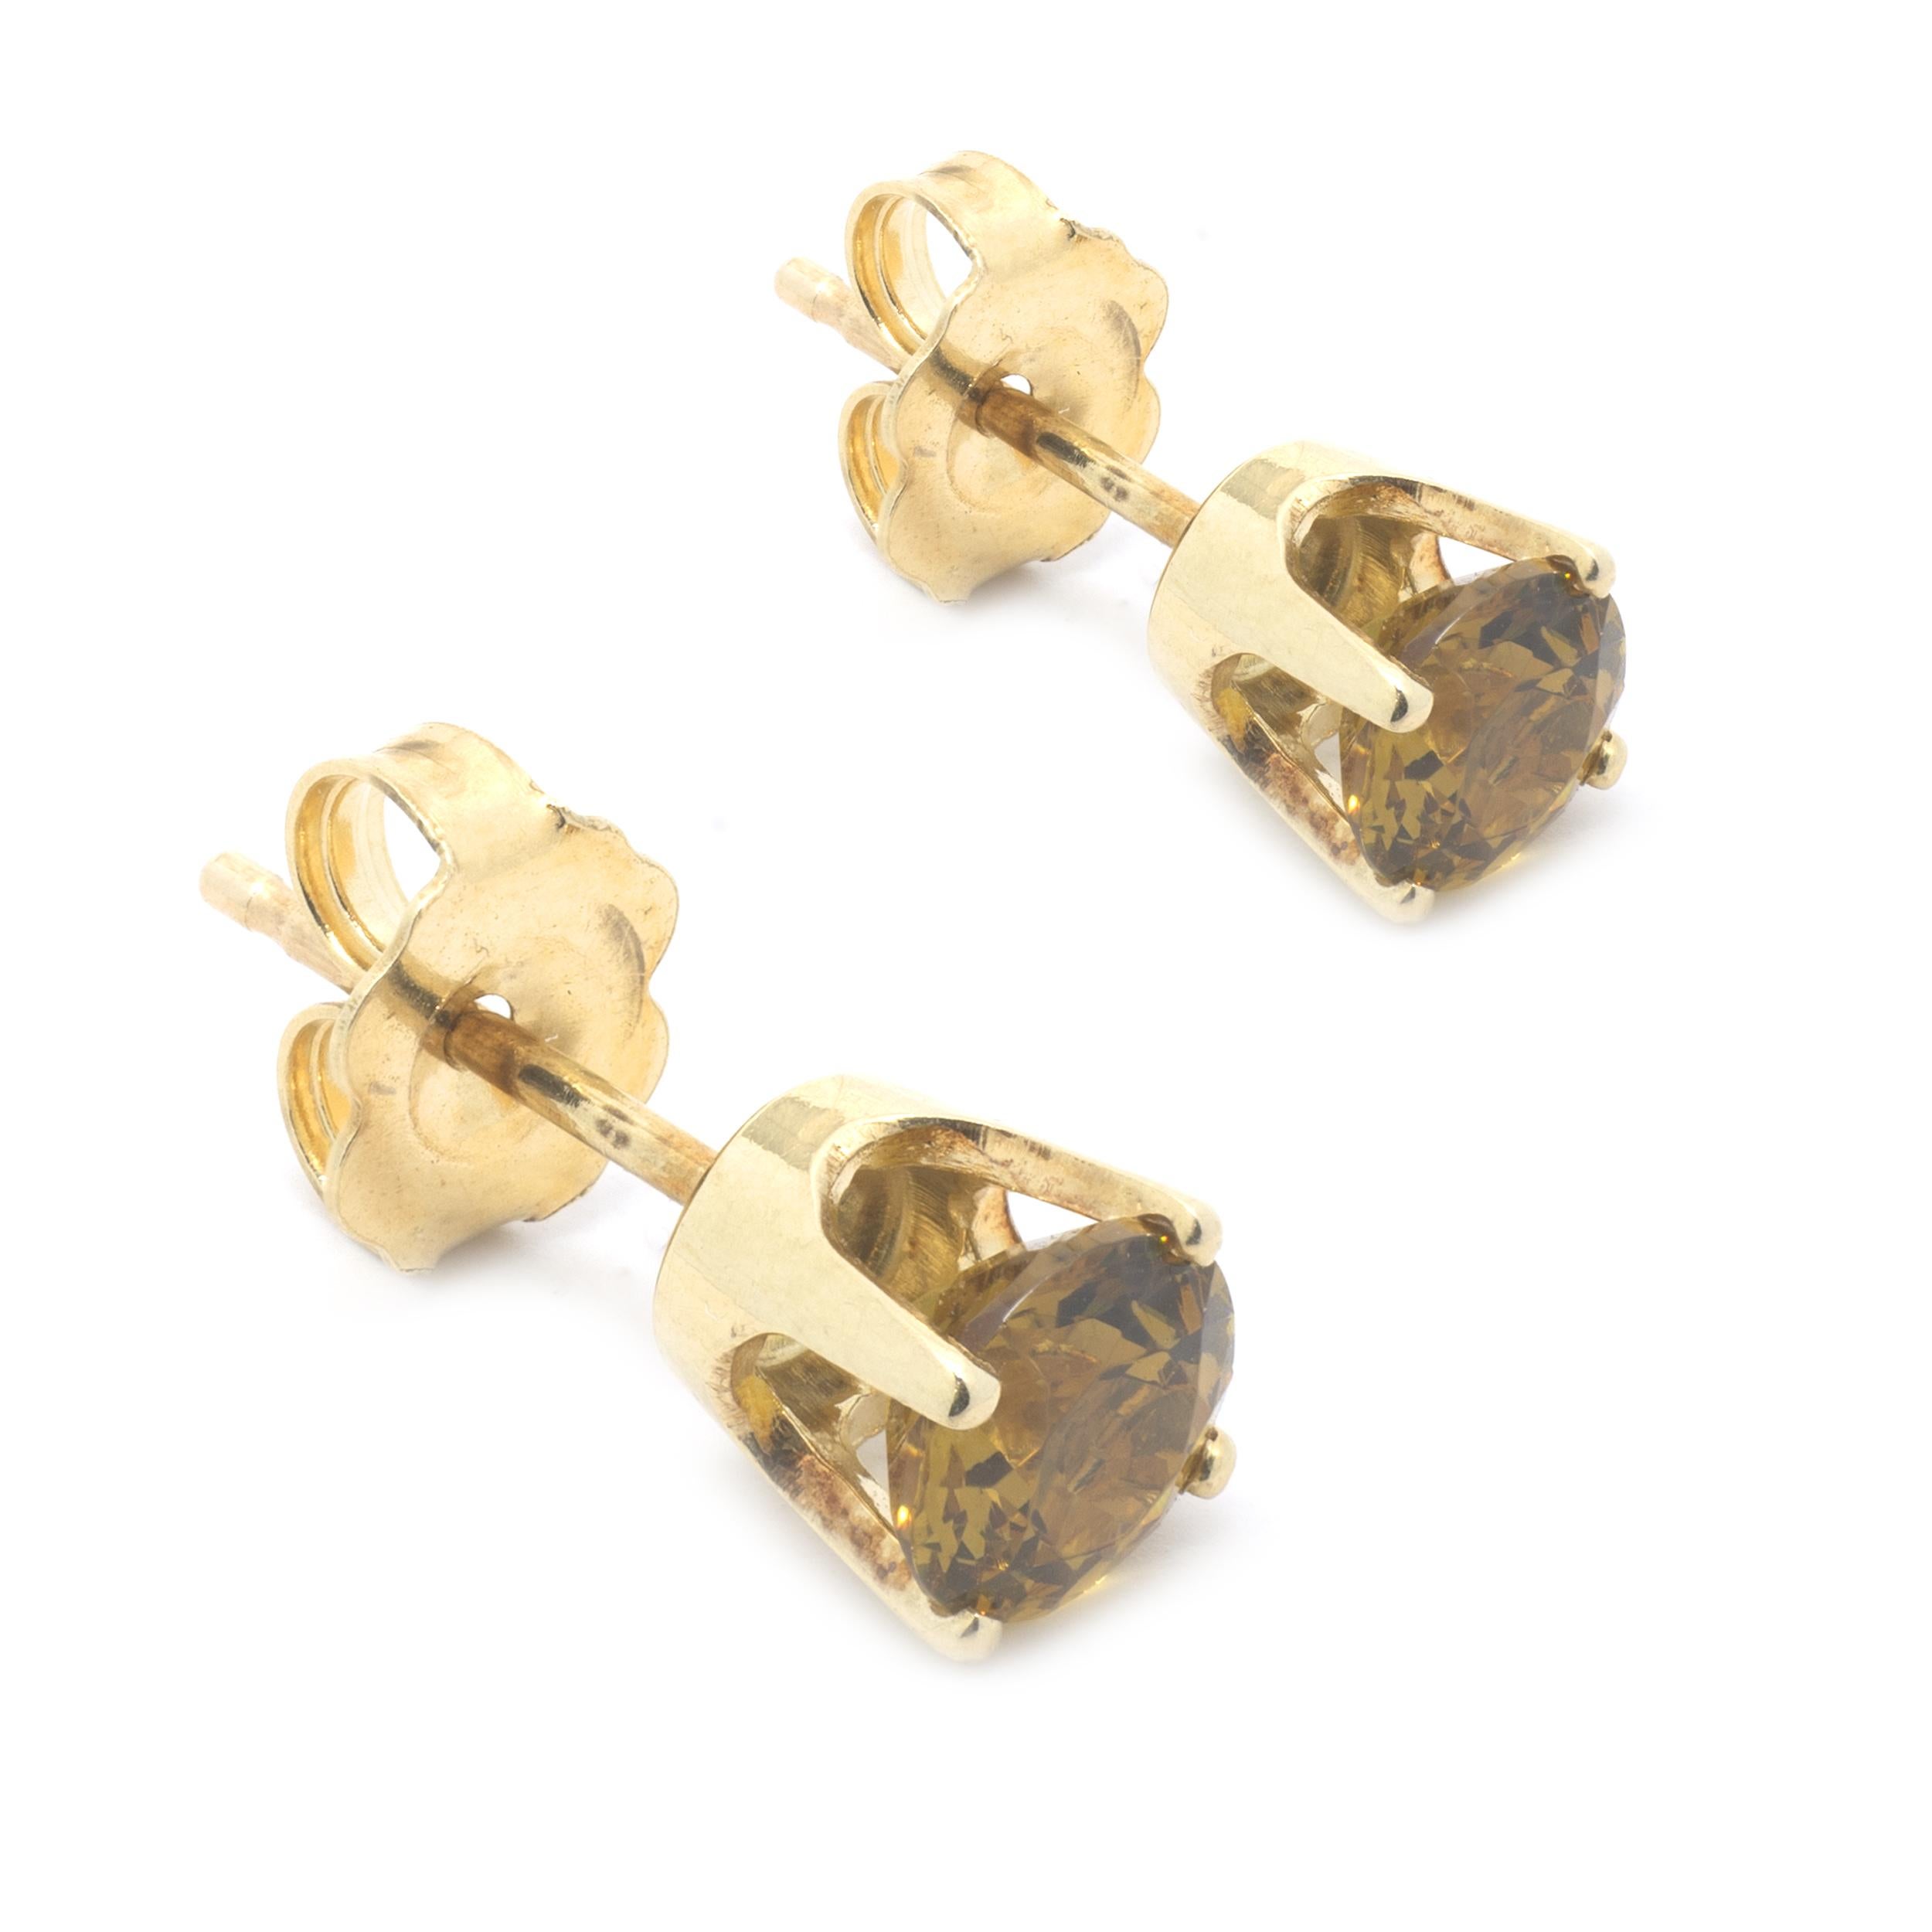 Designer: custom
Material: 14K yellow gold
Zircon: 2 round brilliant cut = 1.20cttw
Color: Golden
Clarity: AAA+
Dimensions: earrings measure 5mm in diameter
Weight: 1.22 grams
